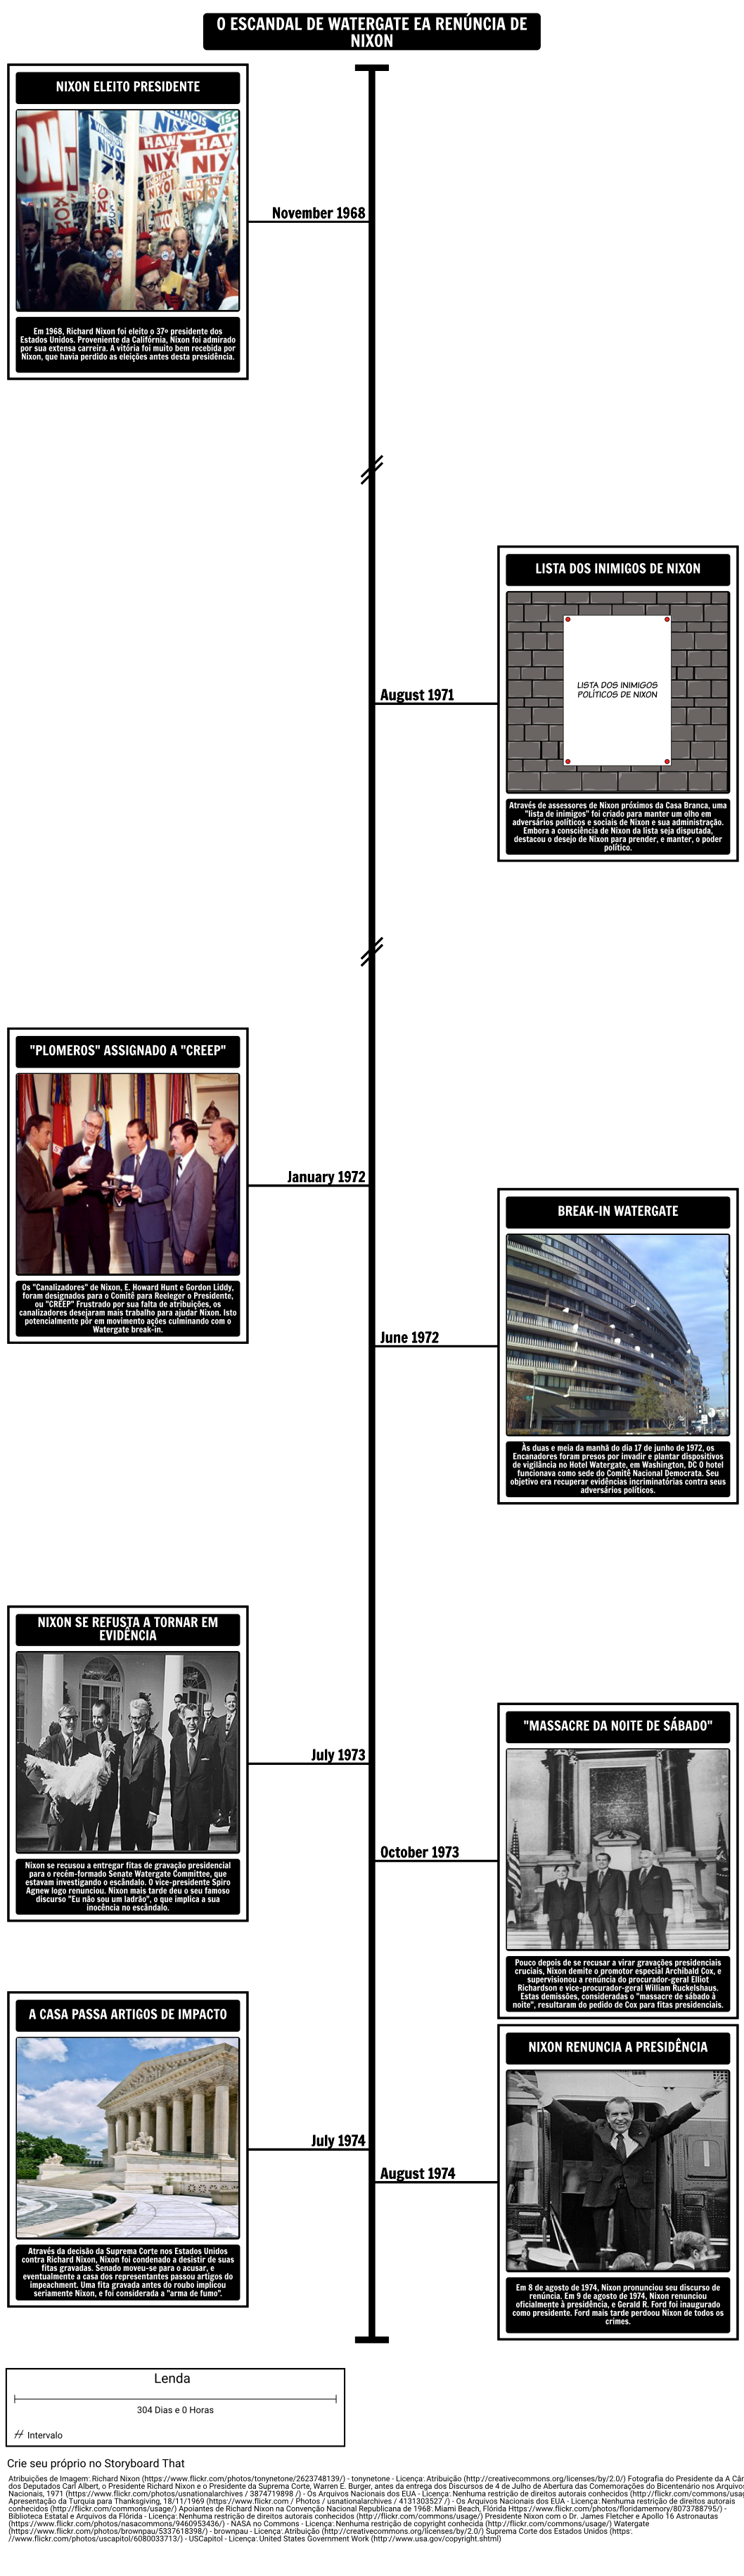 O Cronograma do Escândalo de Watergate e a Renúncia de Nixon